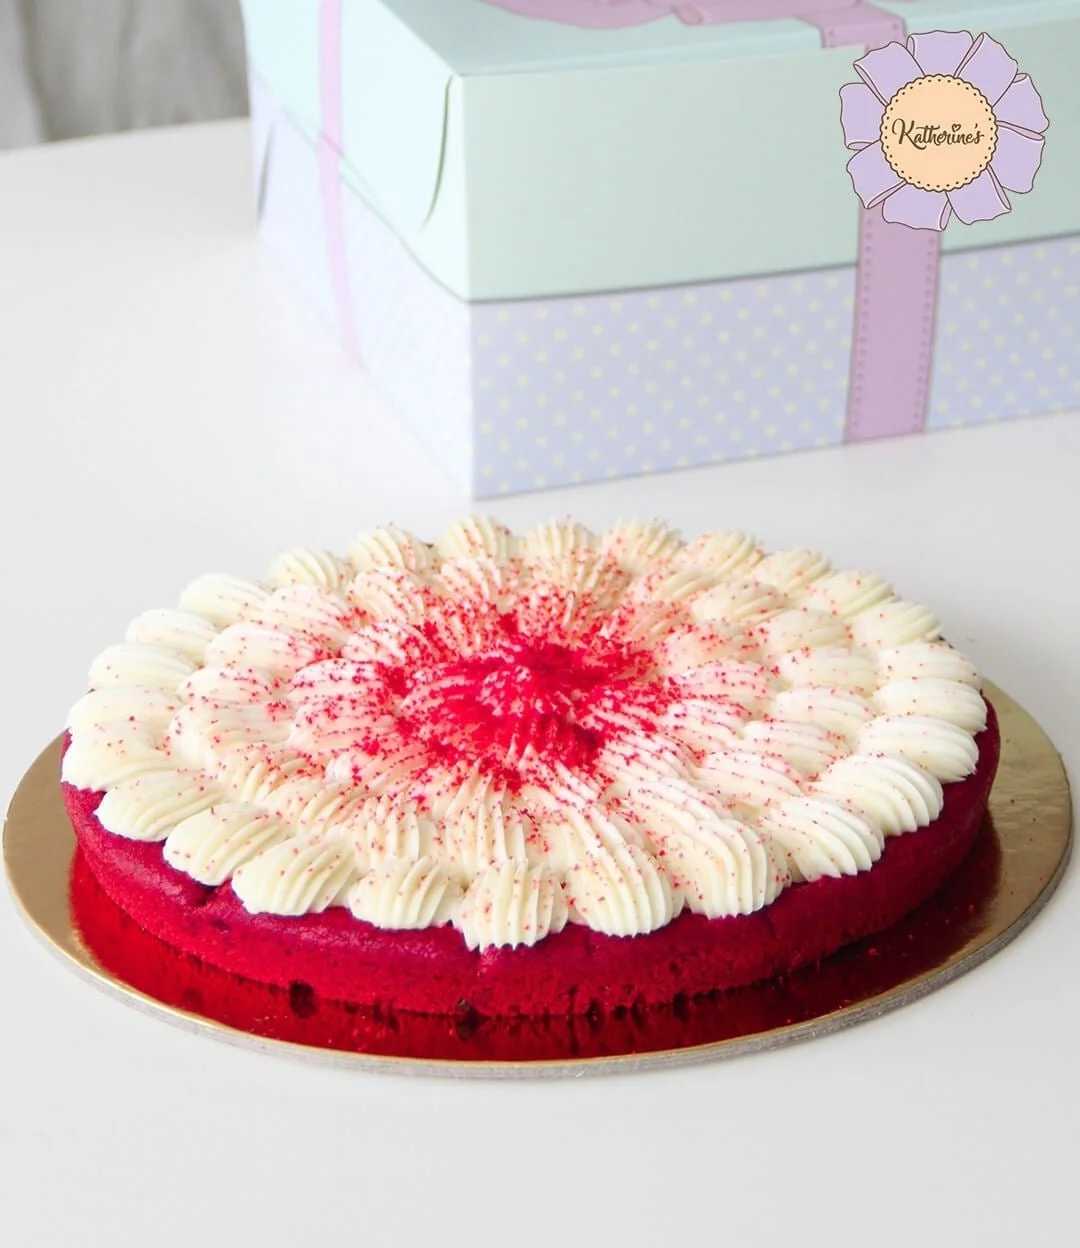 Classic Red Velvet Cookie Cake 